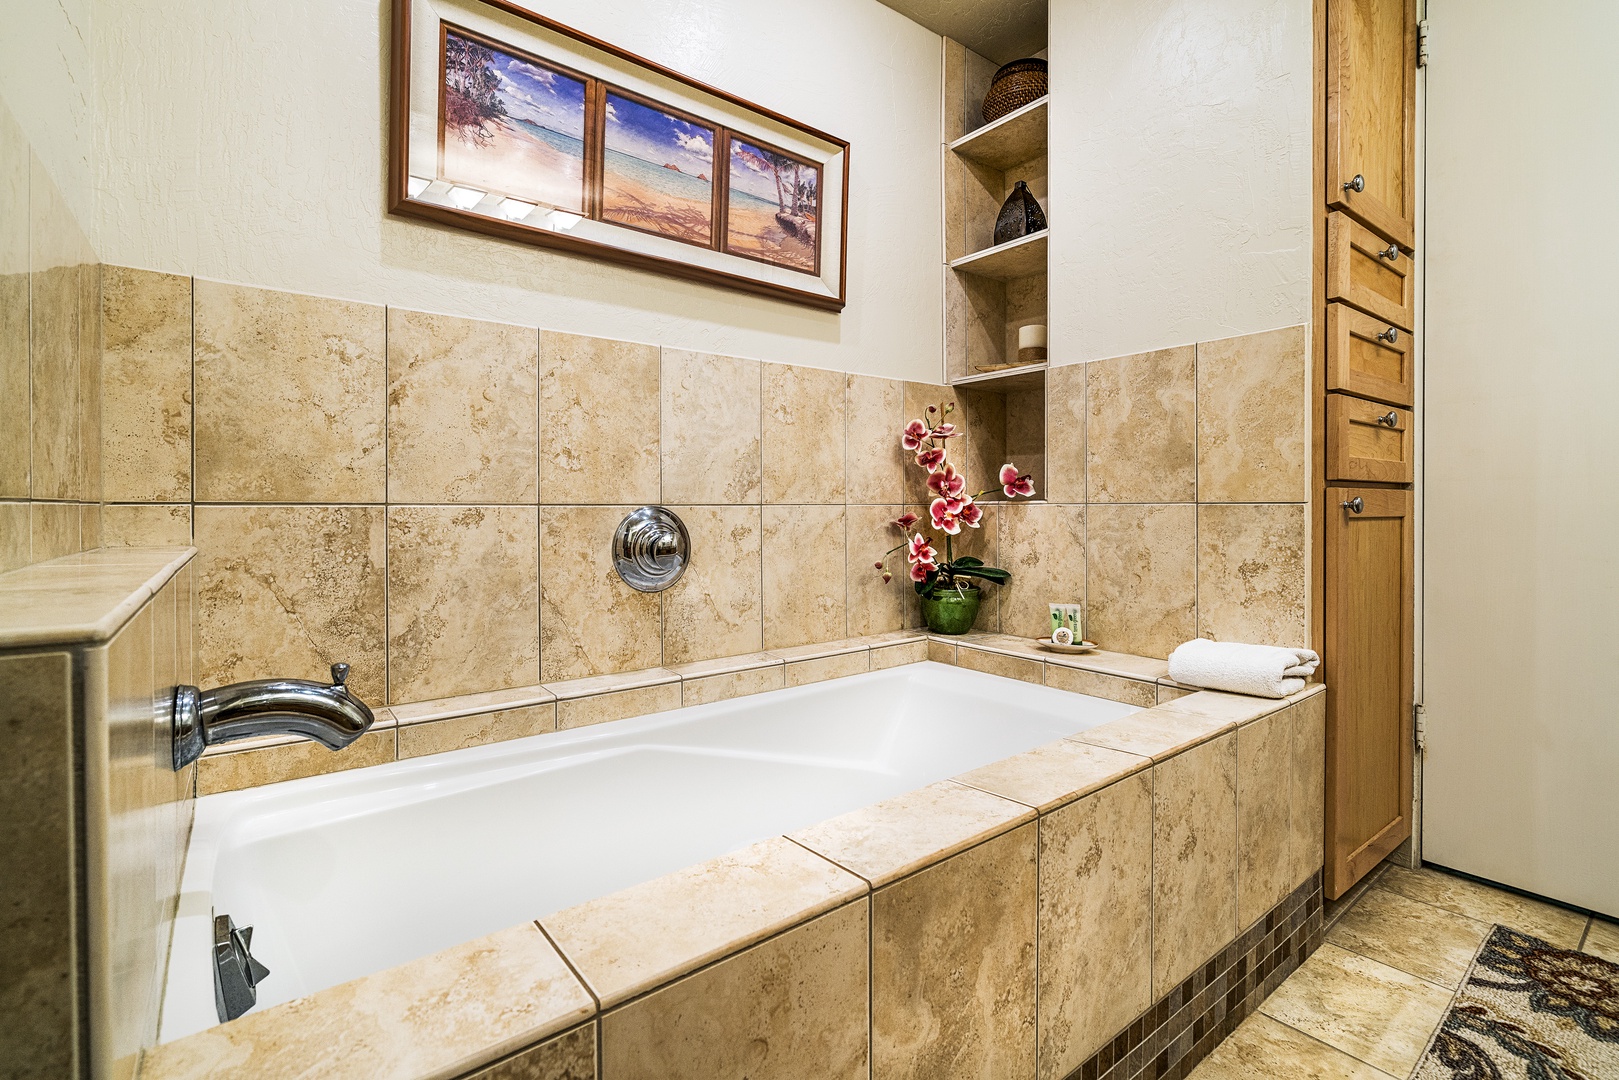 Kailua Kona Vacation Rentals, Casa De Emdeko 336 - Take your pick between the relaxing bath or standing shower